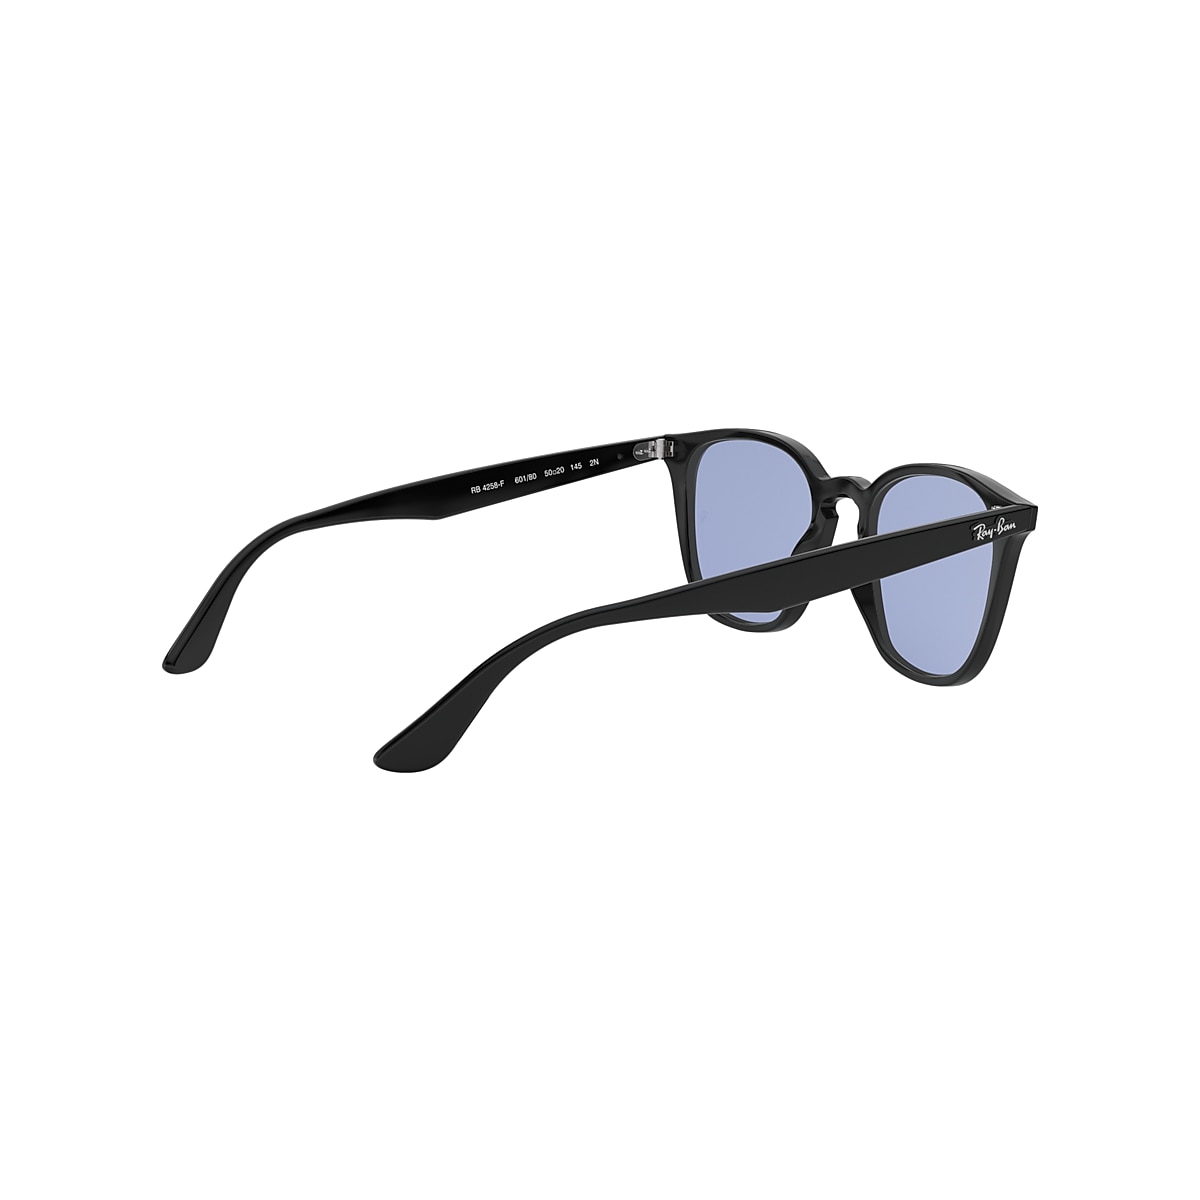 Ray-Ban Rb4258 Washed Lenses Sunglasses Black Frame Blue Lenses 52-20